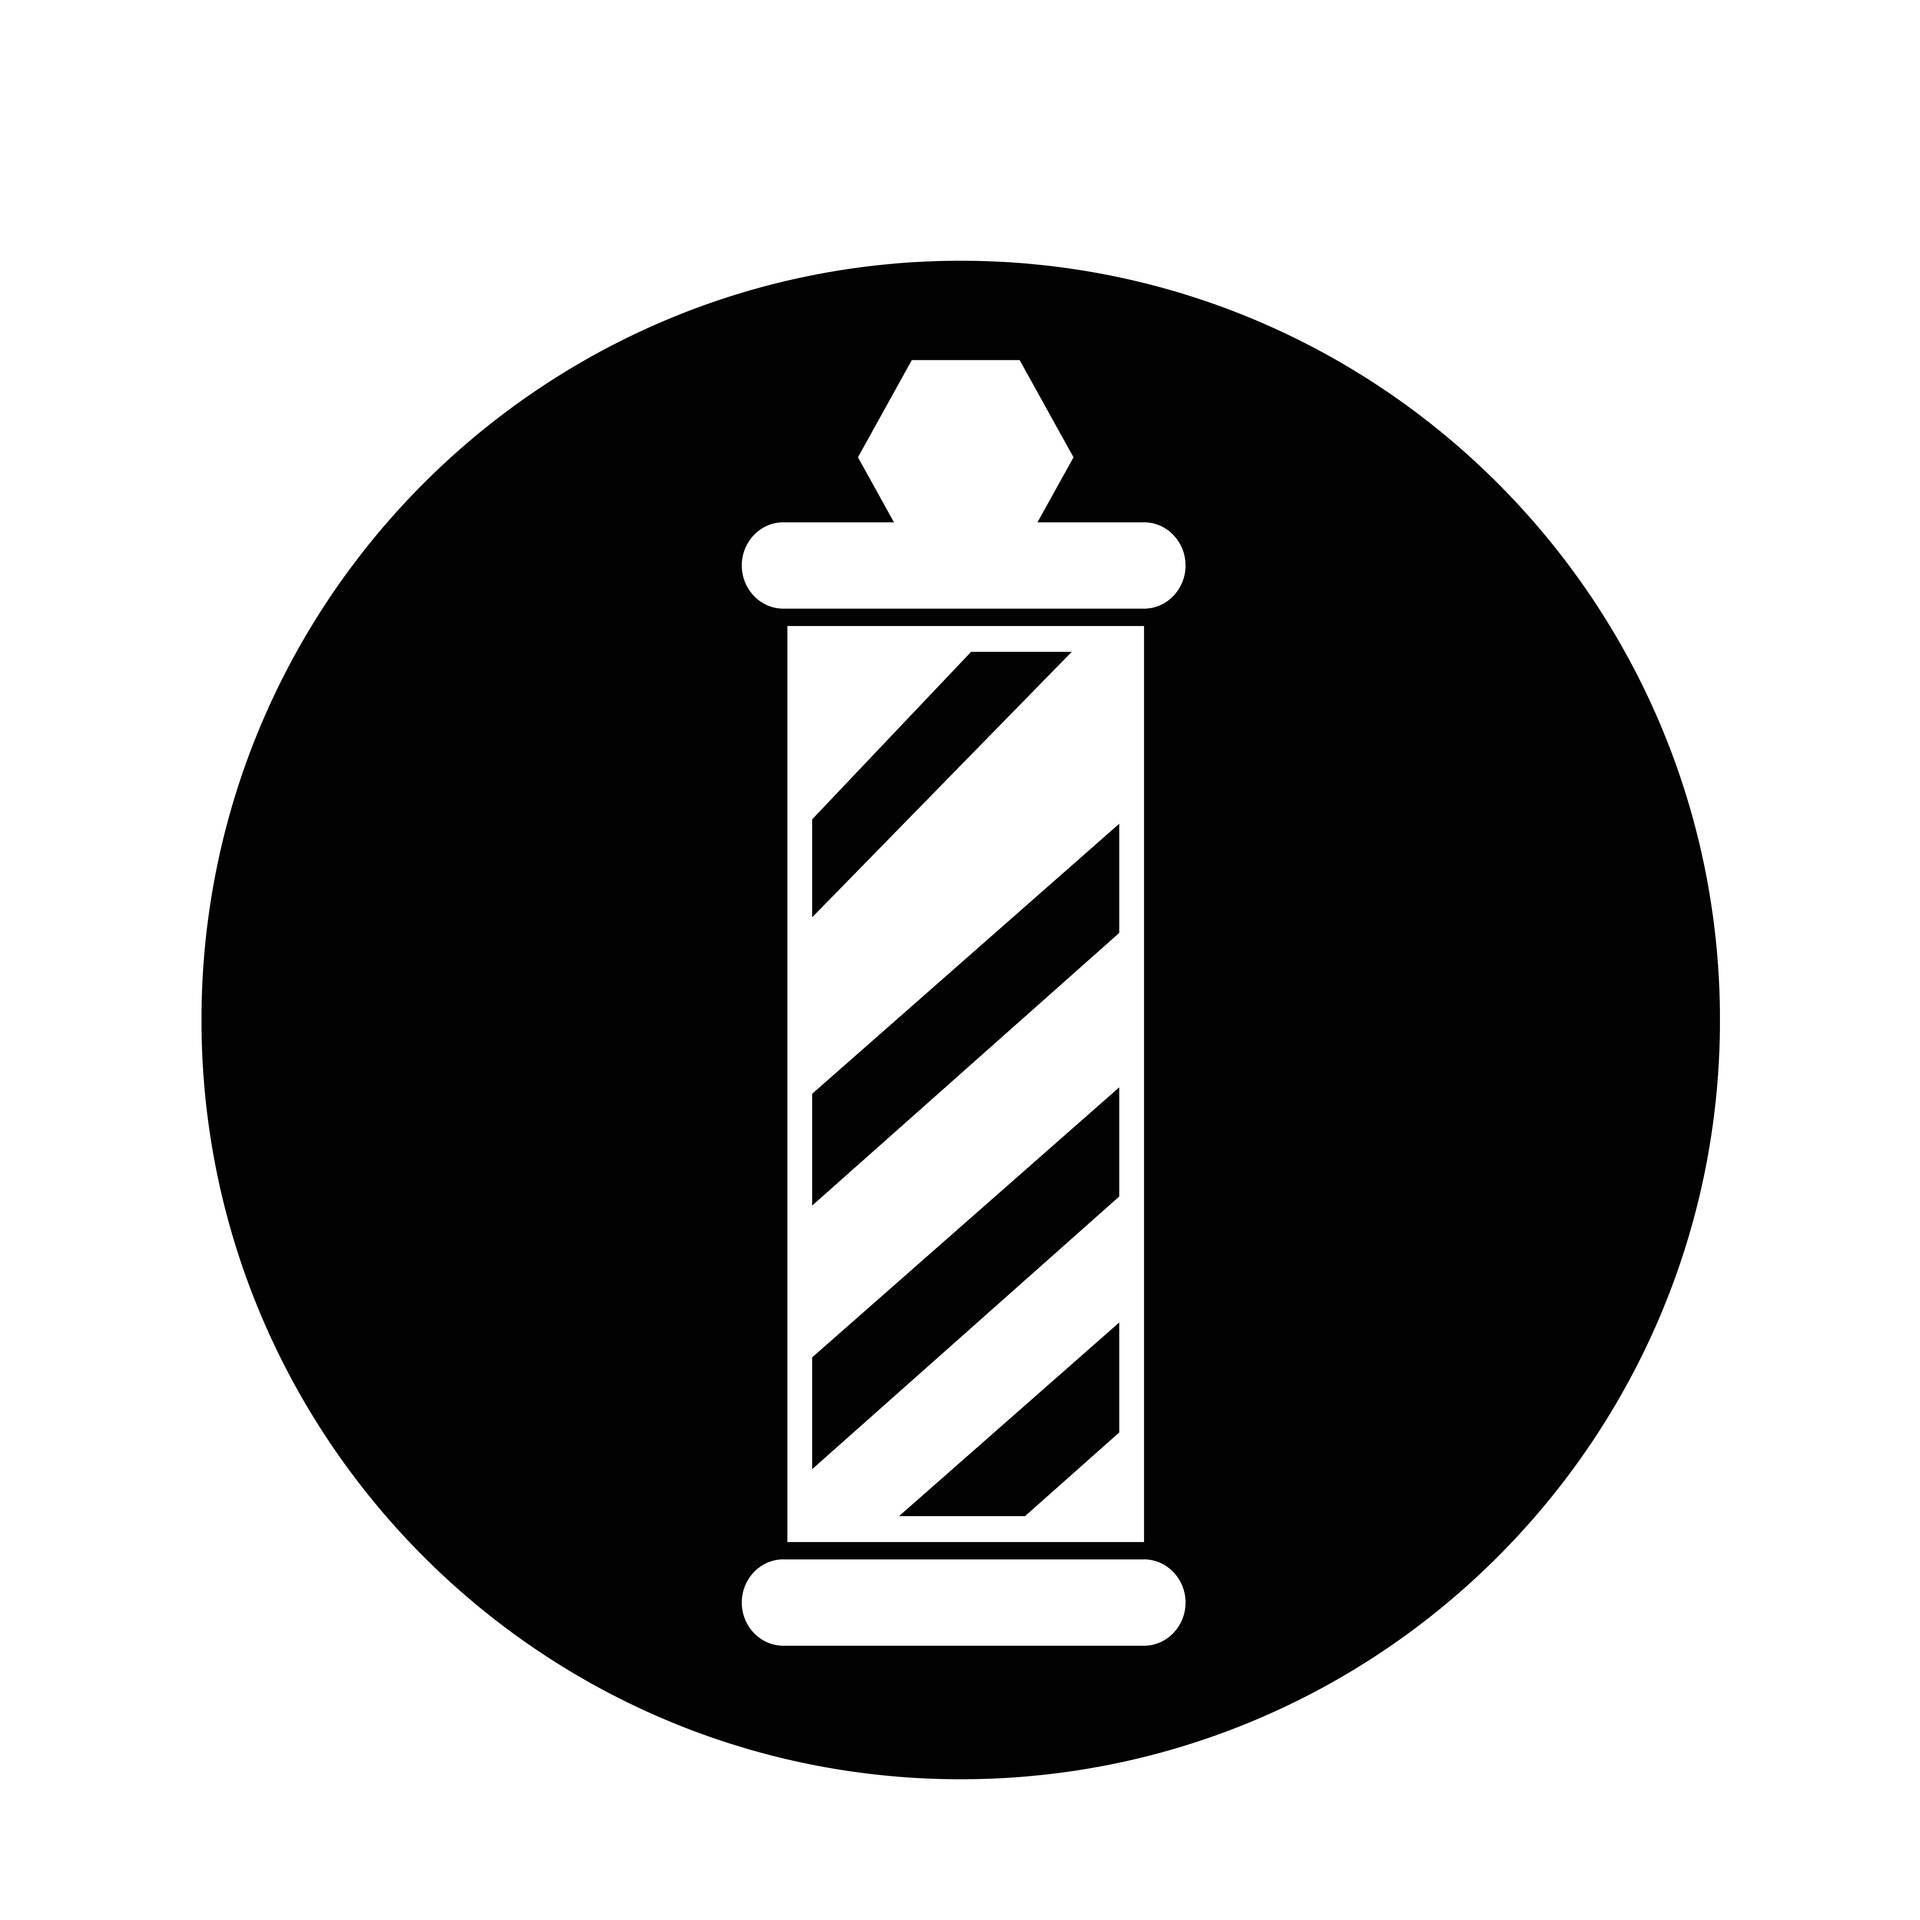 Classic Barber Pole Symbol. Background